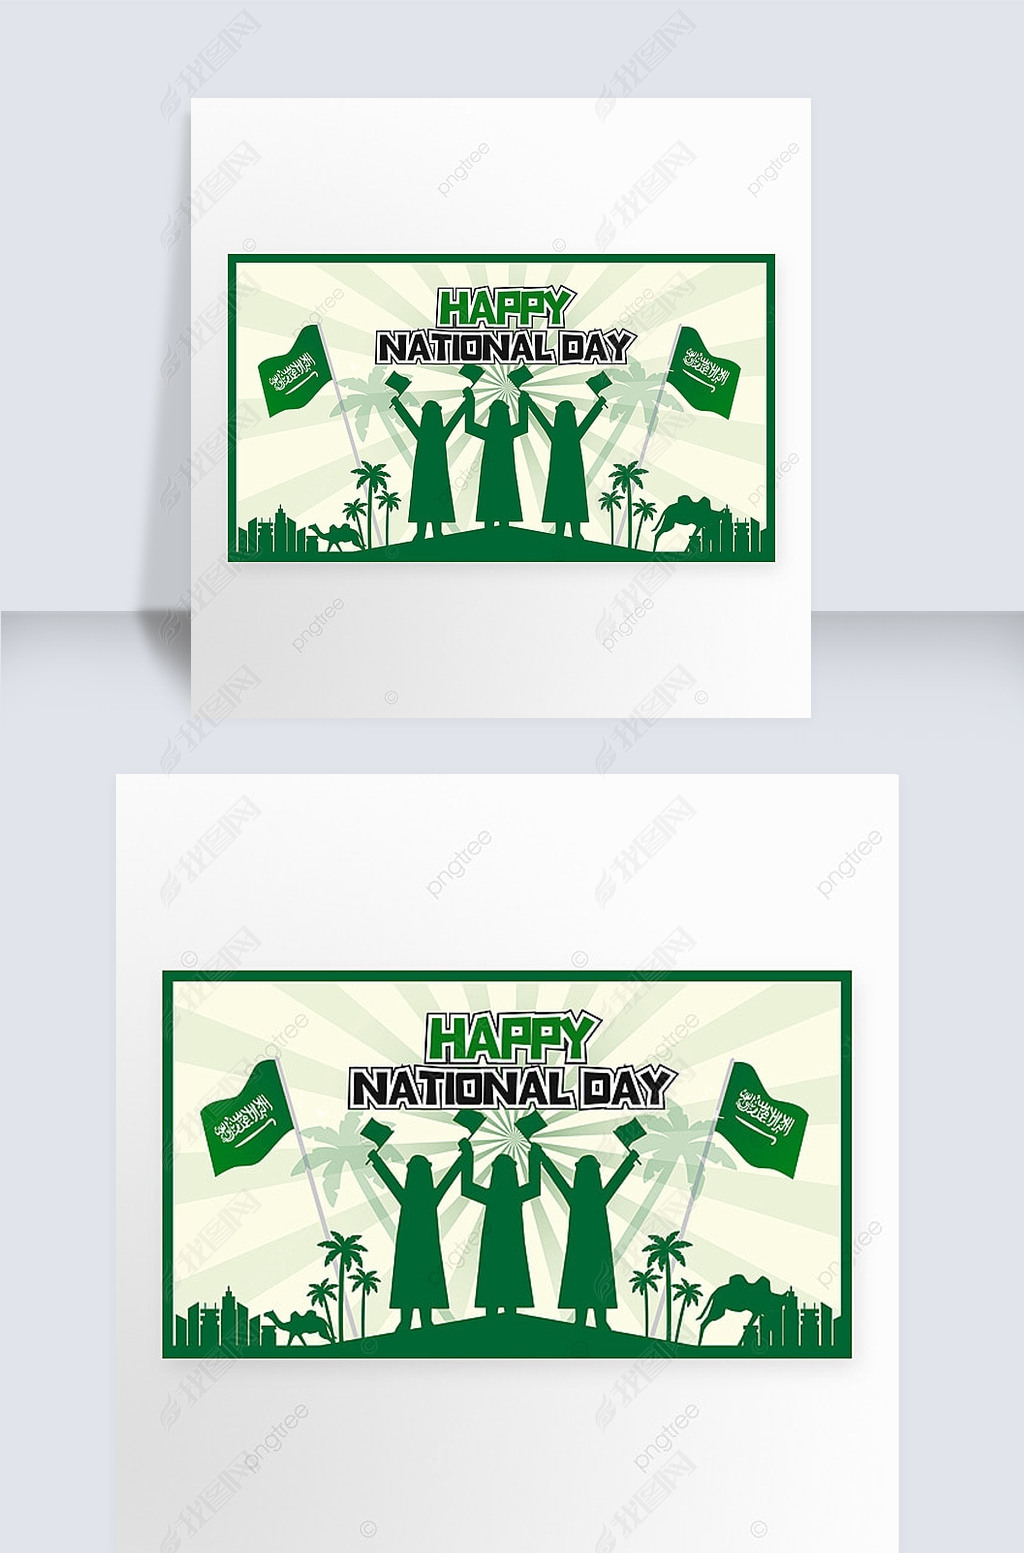 saudi national day silhouette character